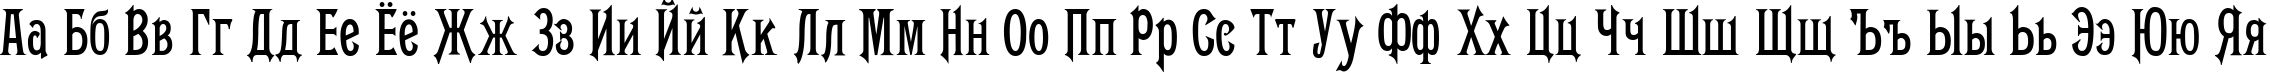 Пример написания русского алфавита шрифтом Conkordia